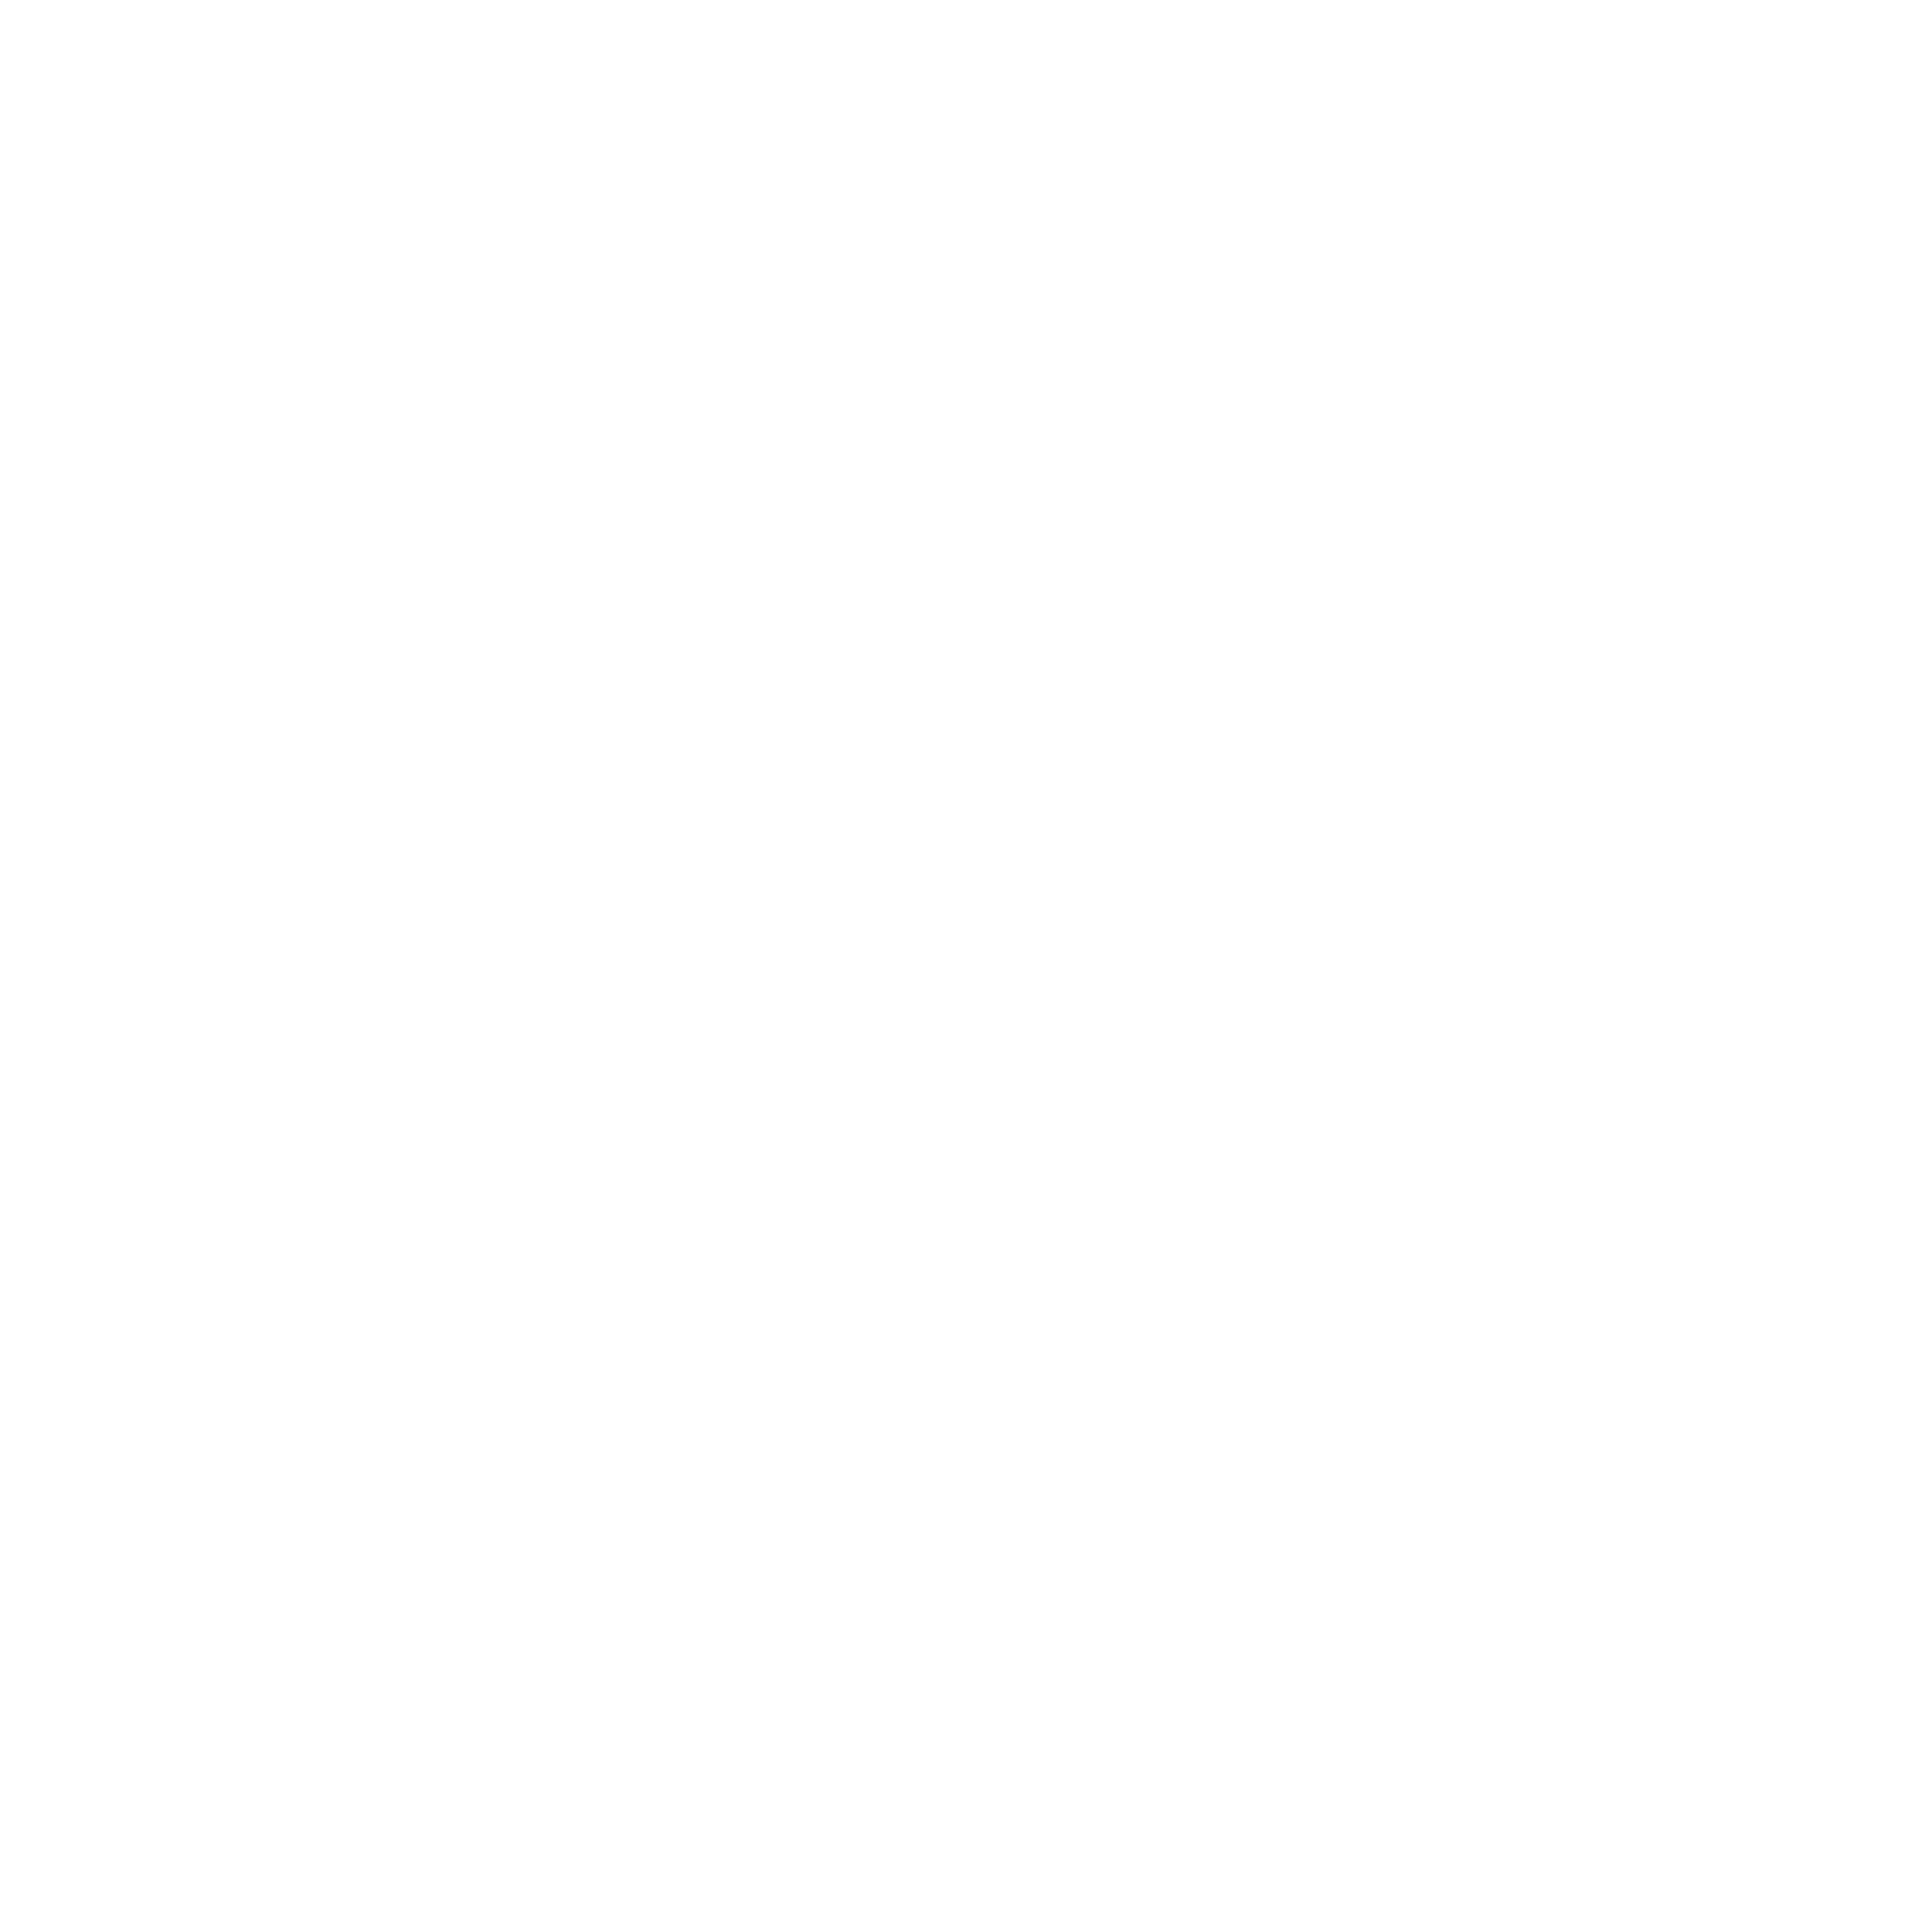 Brown and White Logo - Millward Brown Logo PNG Transparent & SVG Vector - Freebie Supply